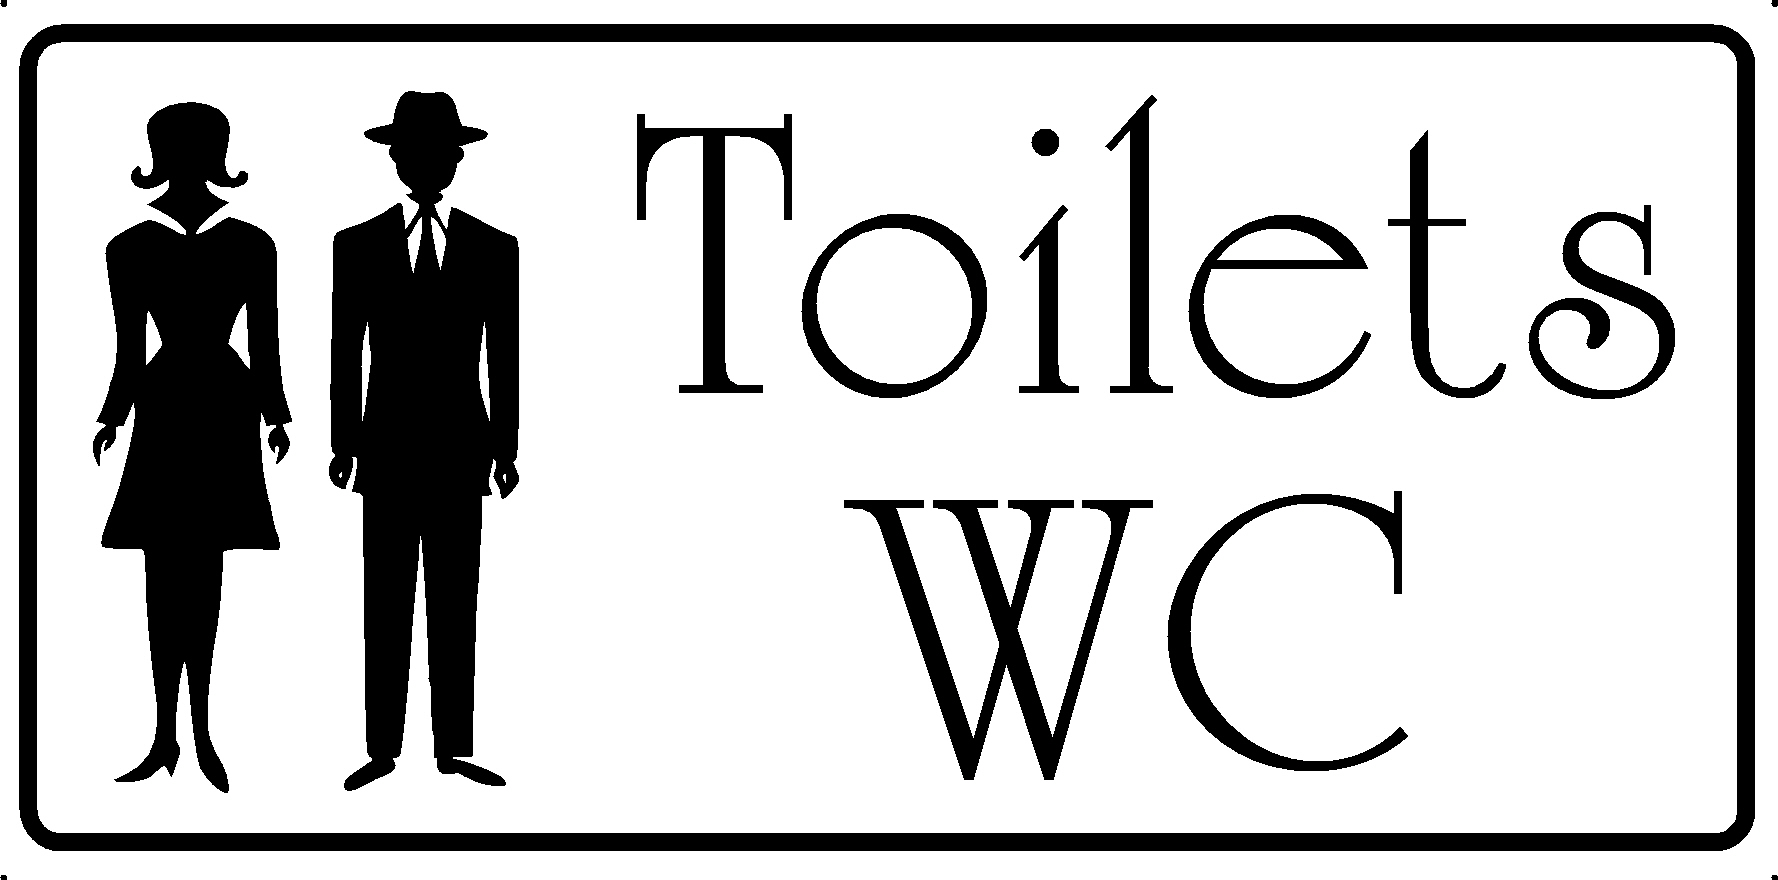 TOILETS WC